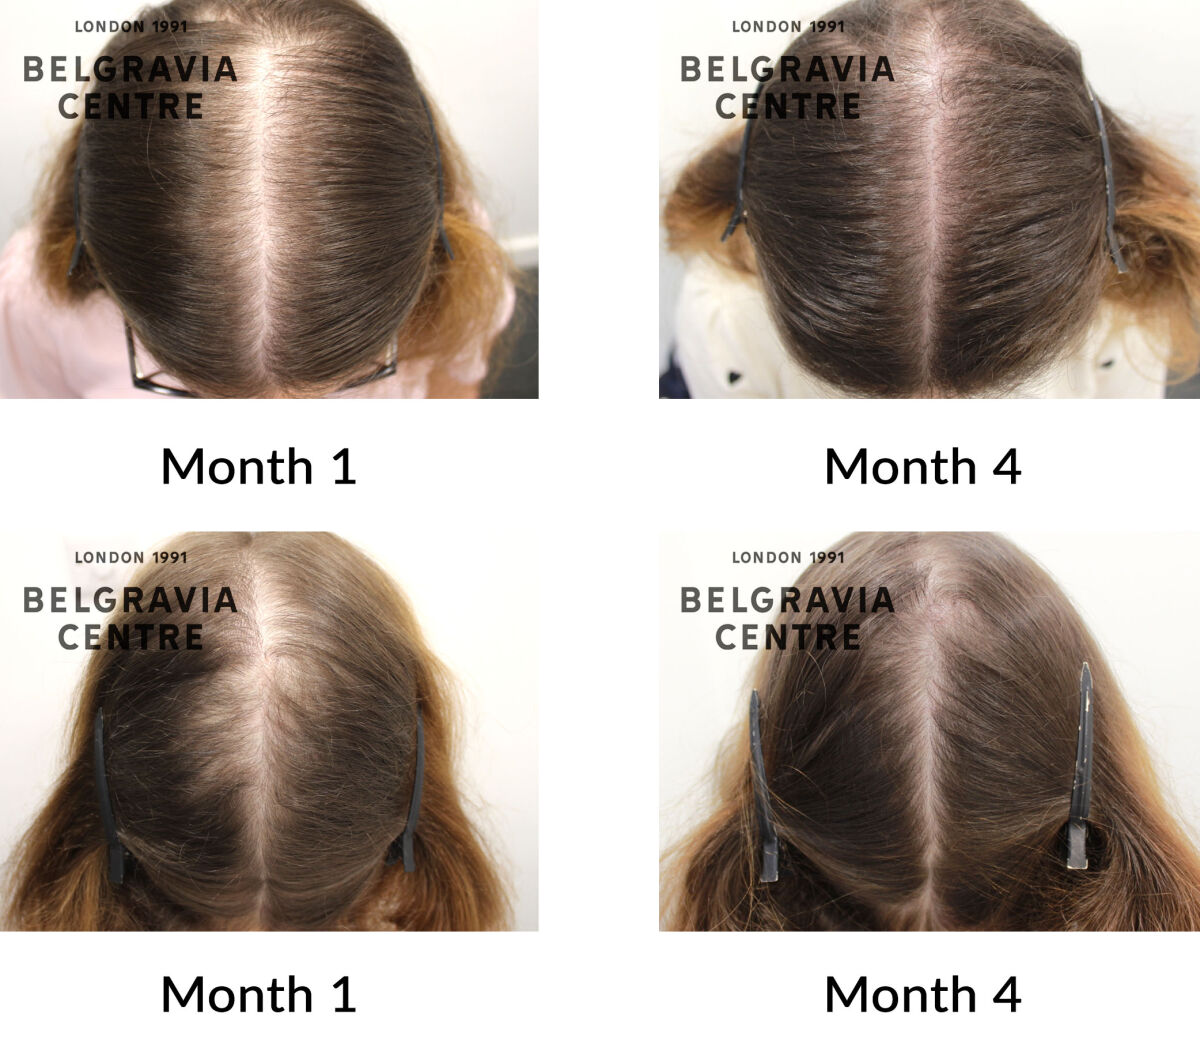 female pattern hair loss and telogen effluvium the belgravia centre 446782